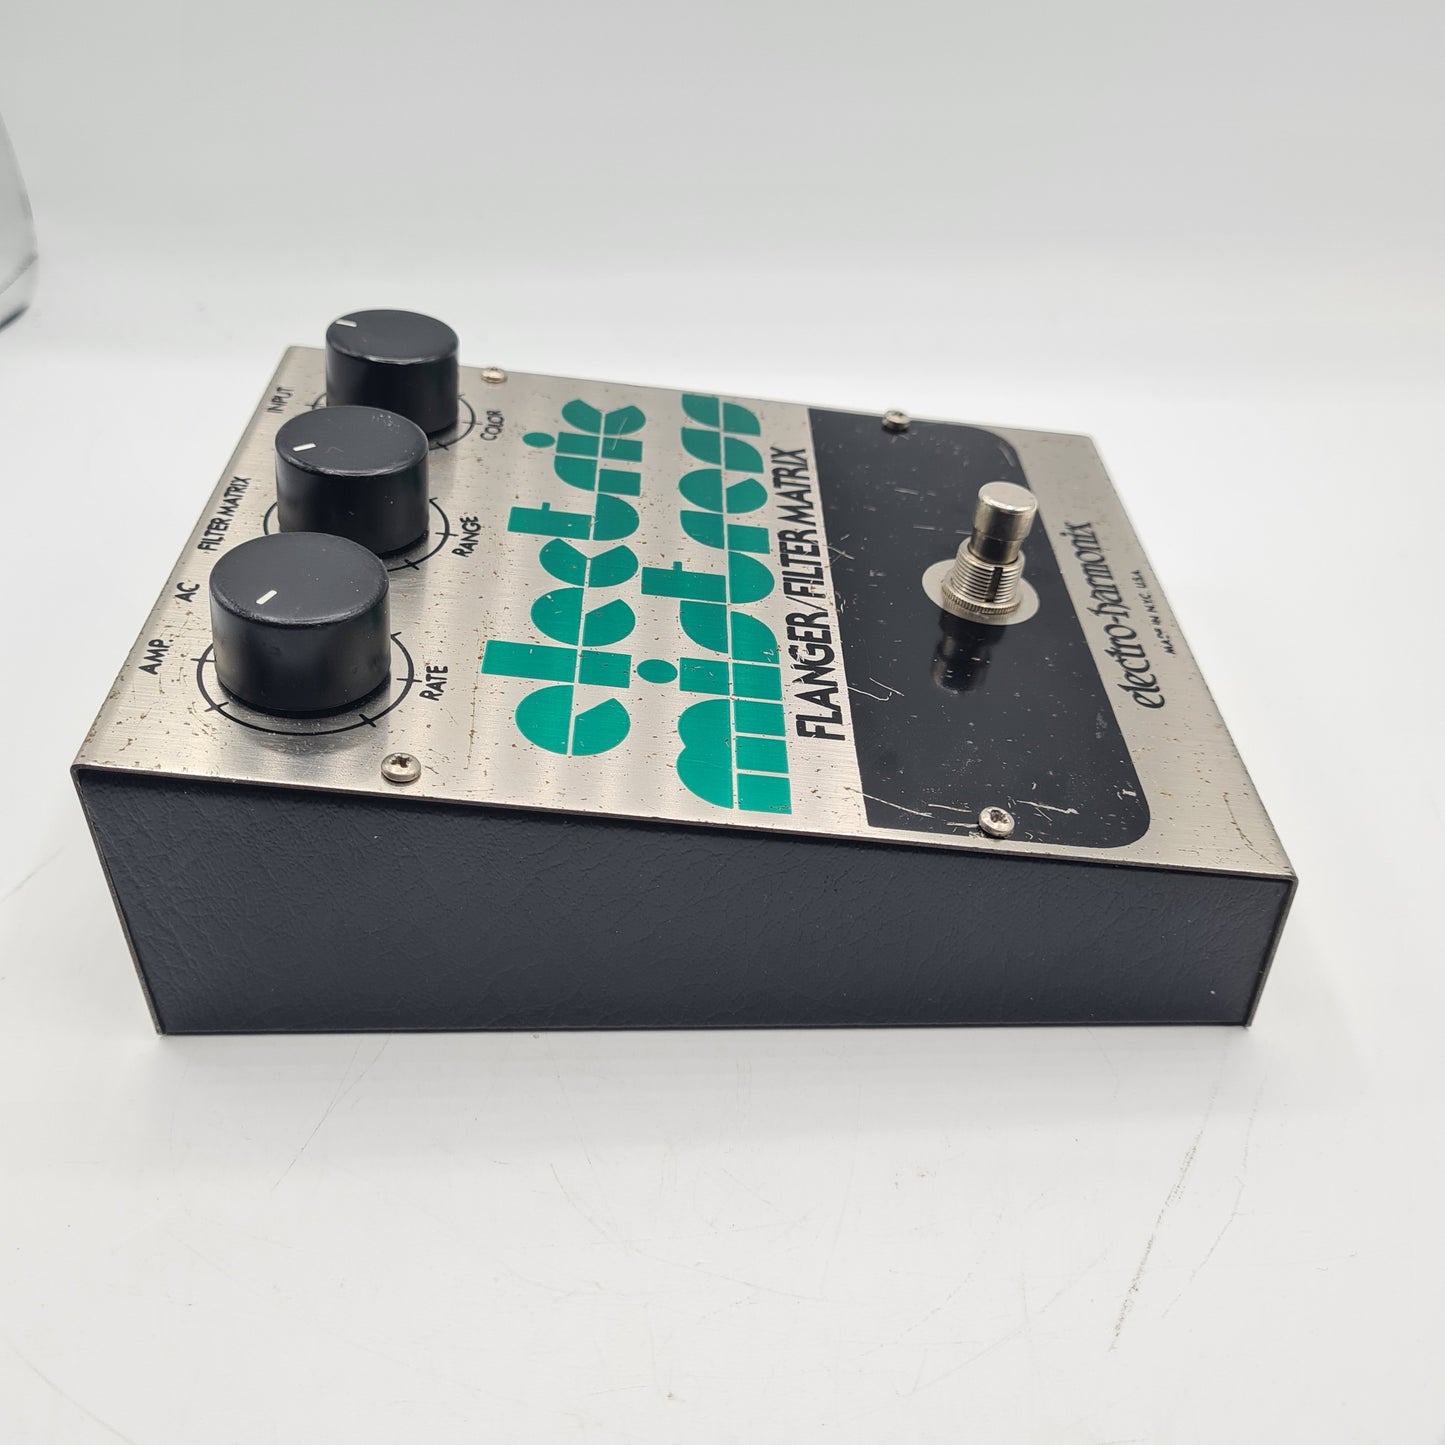 Electro Harmonix Electric Mistress V5 1980